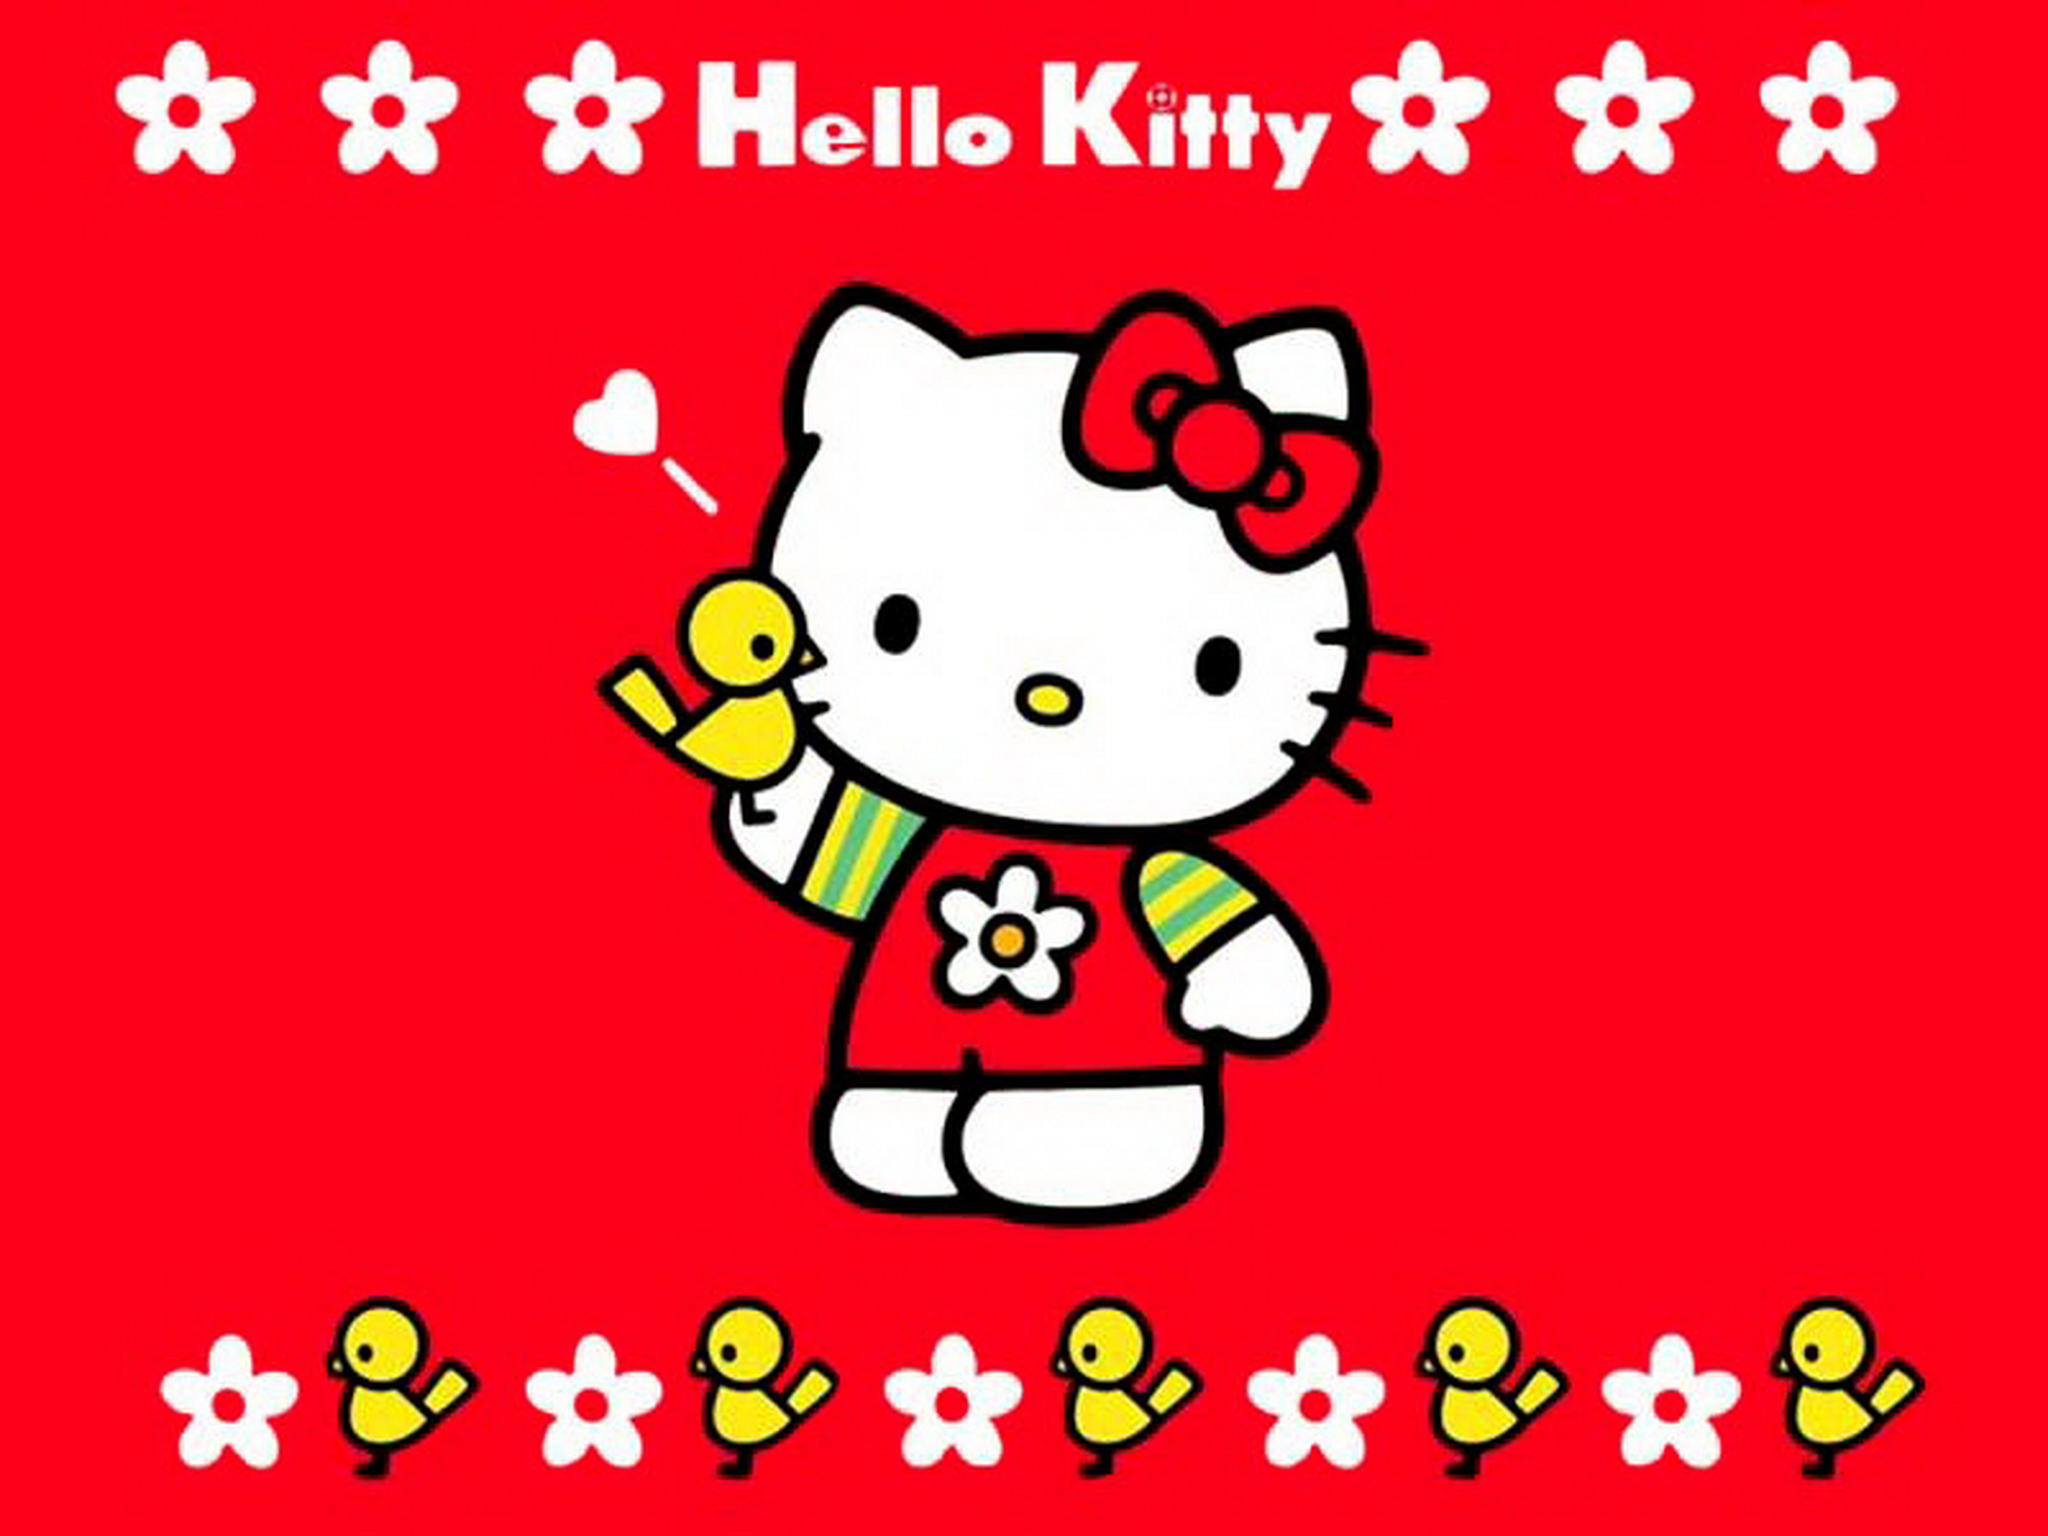 Hello Kitty Wallpaper подборка фото, выложил новые фото